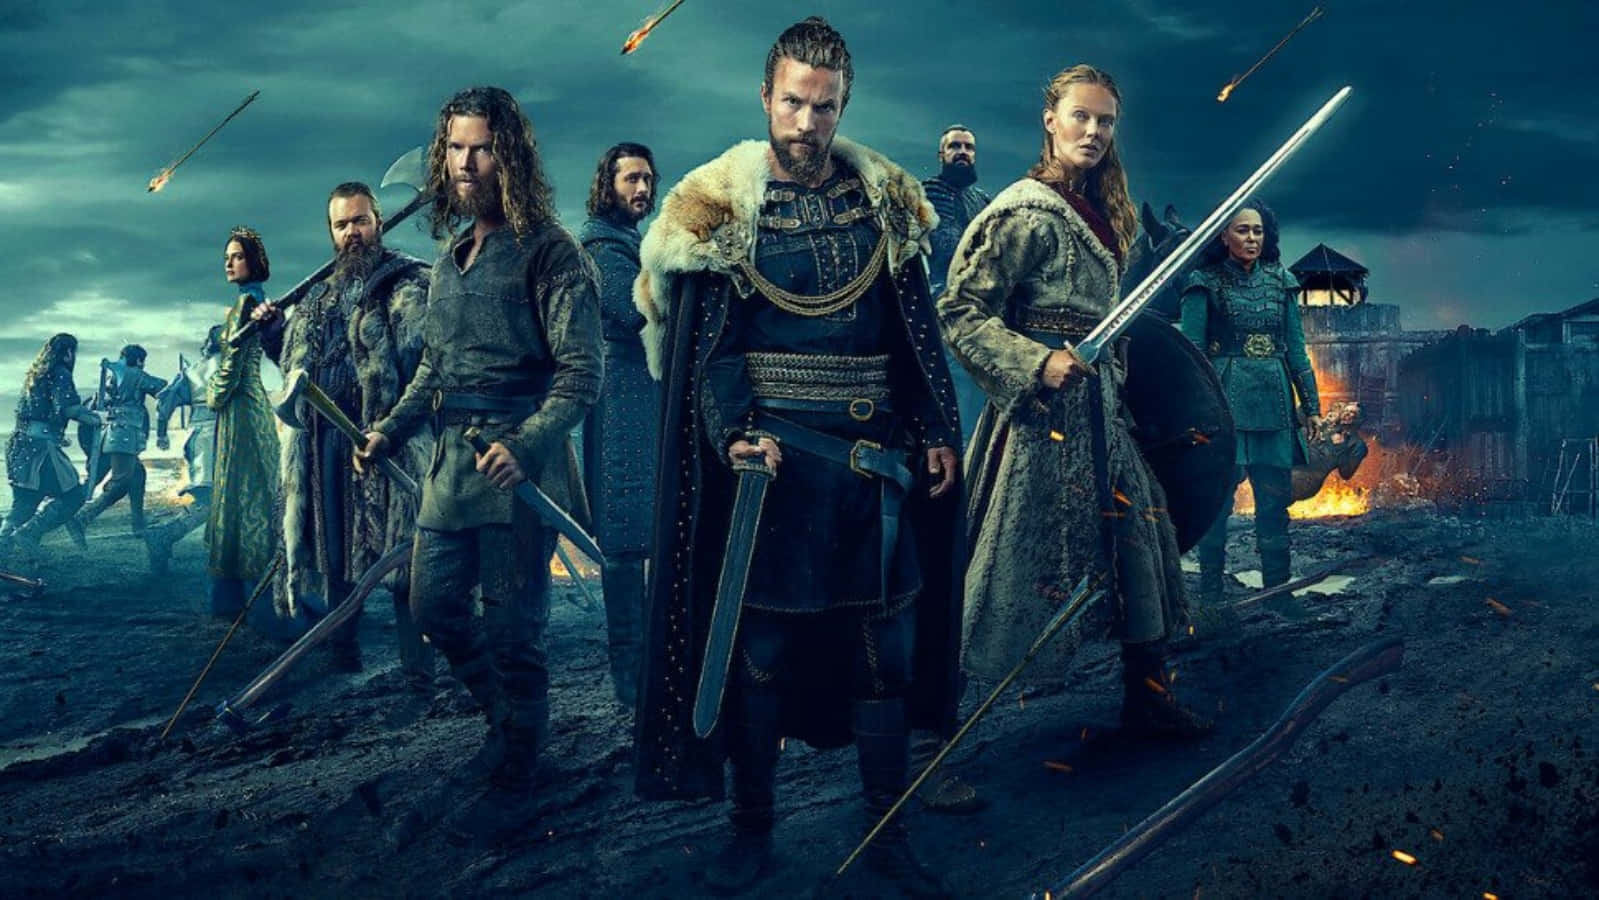 A Legion of Viking Warriors